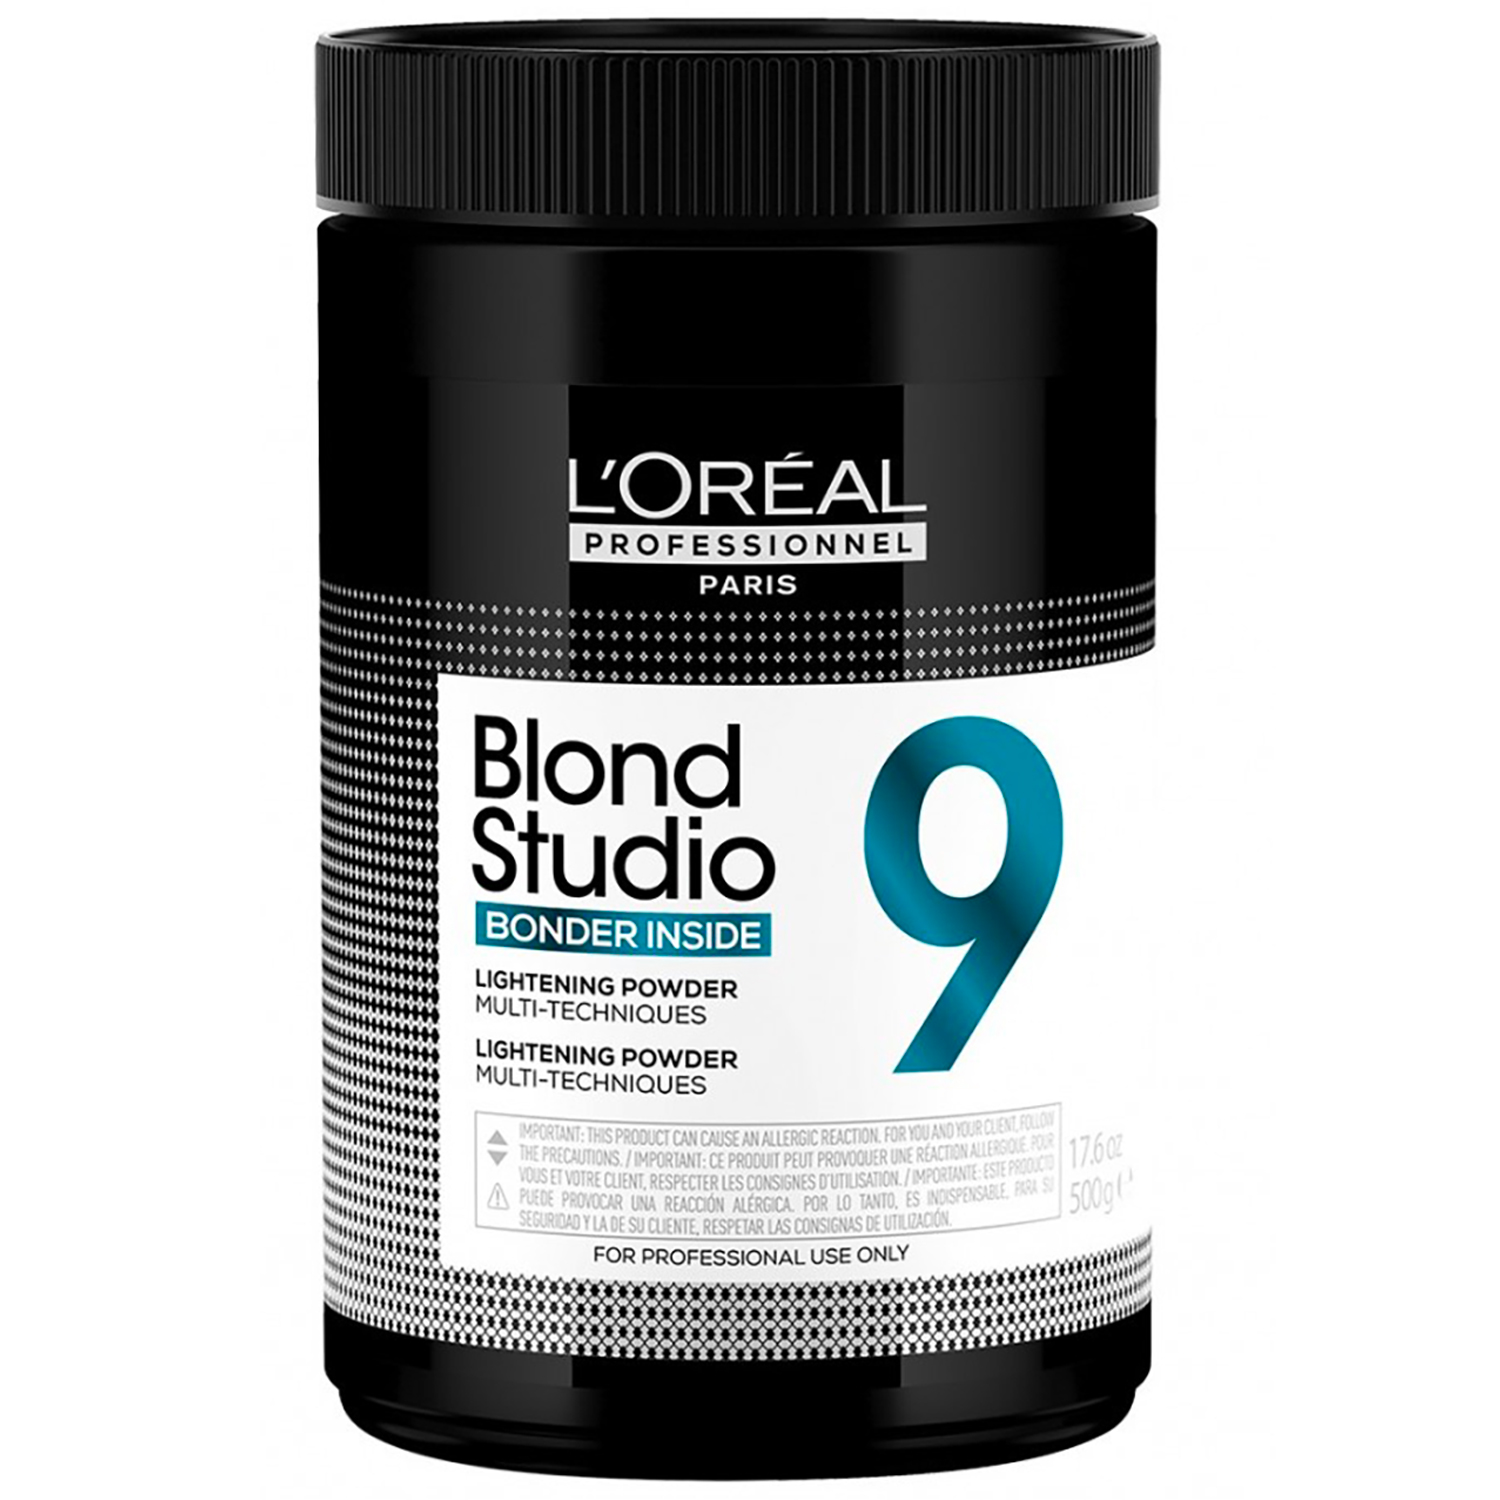 Poudre Dcolorante 9 Bonder Inside Blond Studio L'Oral Professionnel 500G